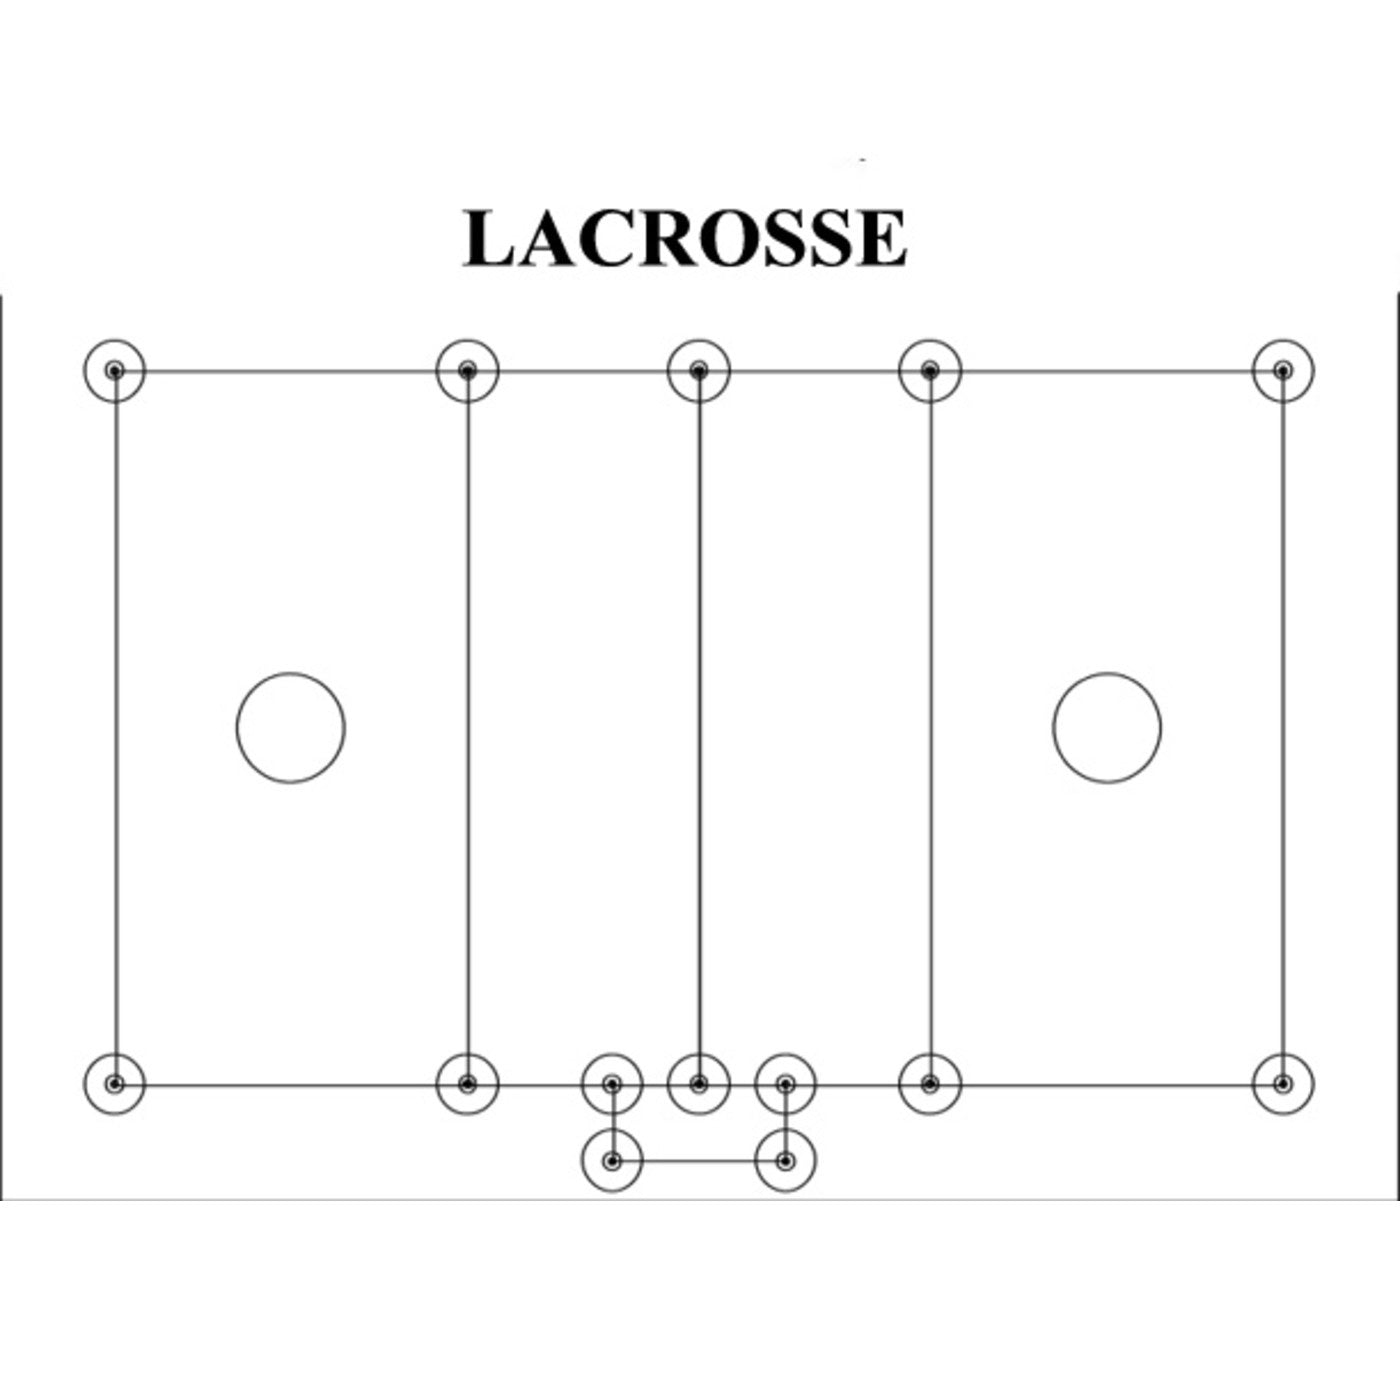 trigon sports proline lacrosse field layout system